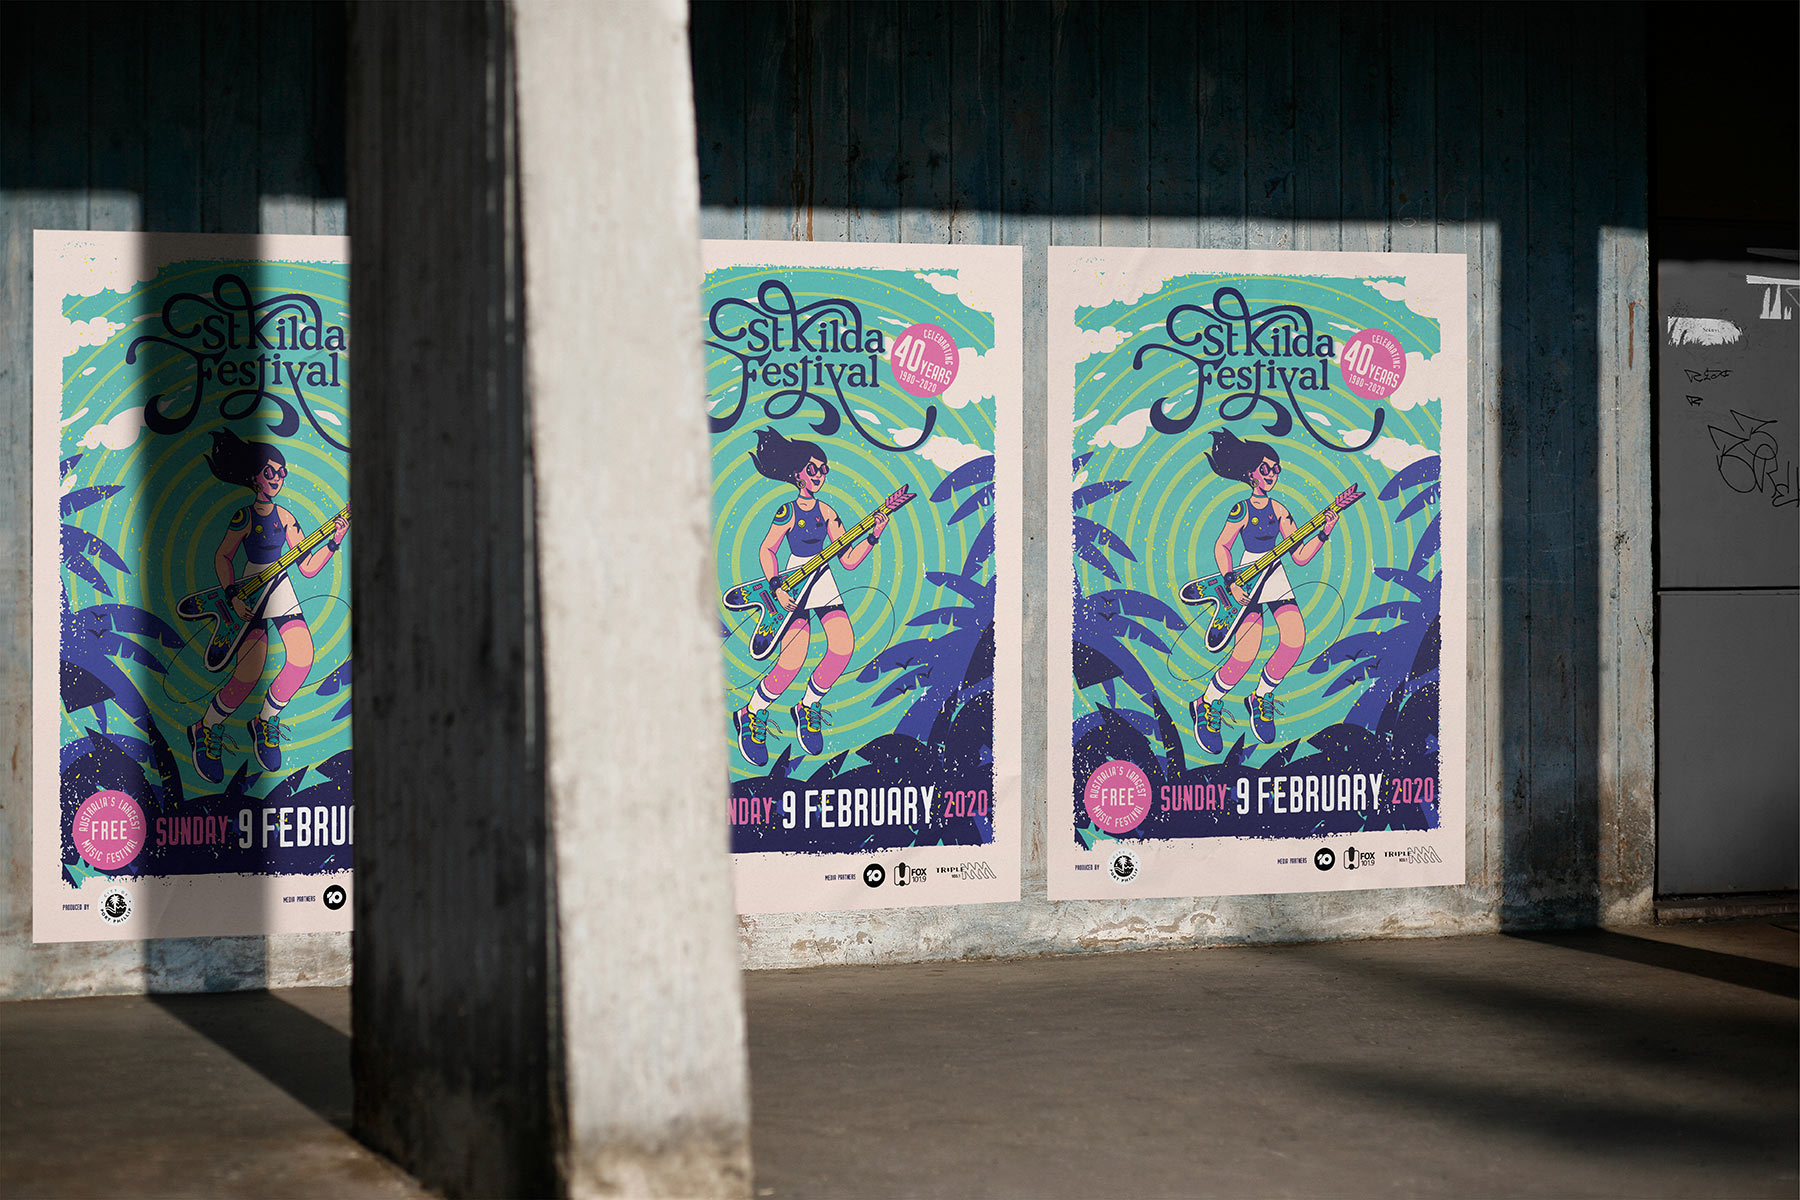 St Kilda Festival 2020 posters